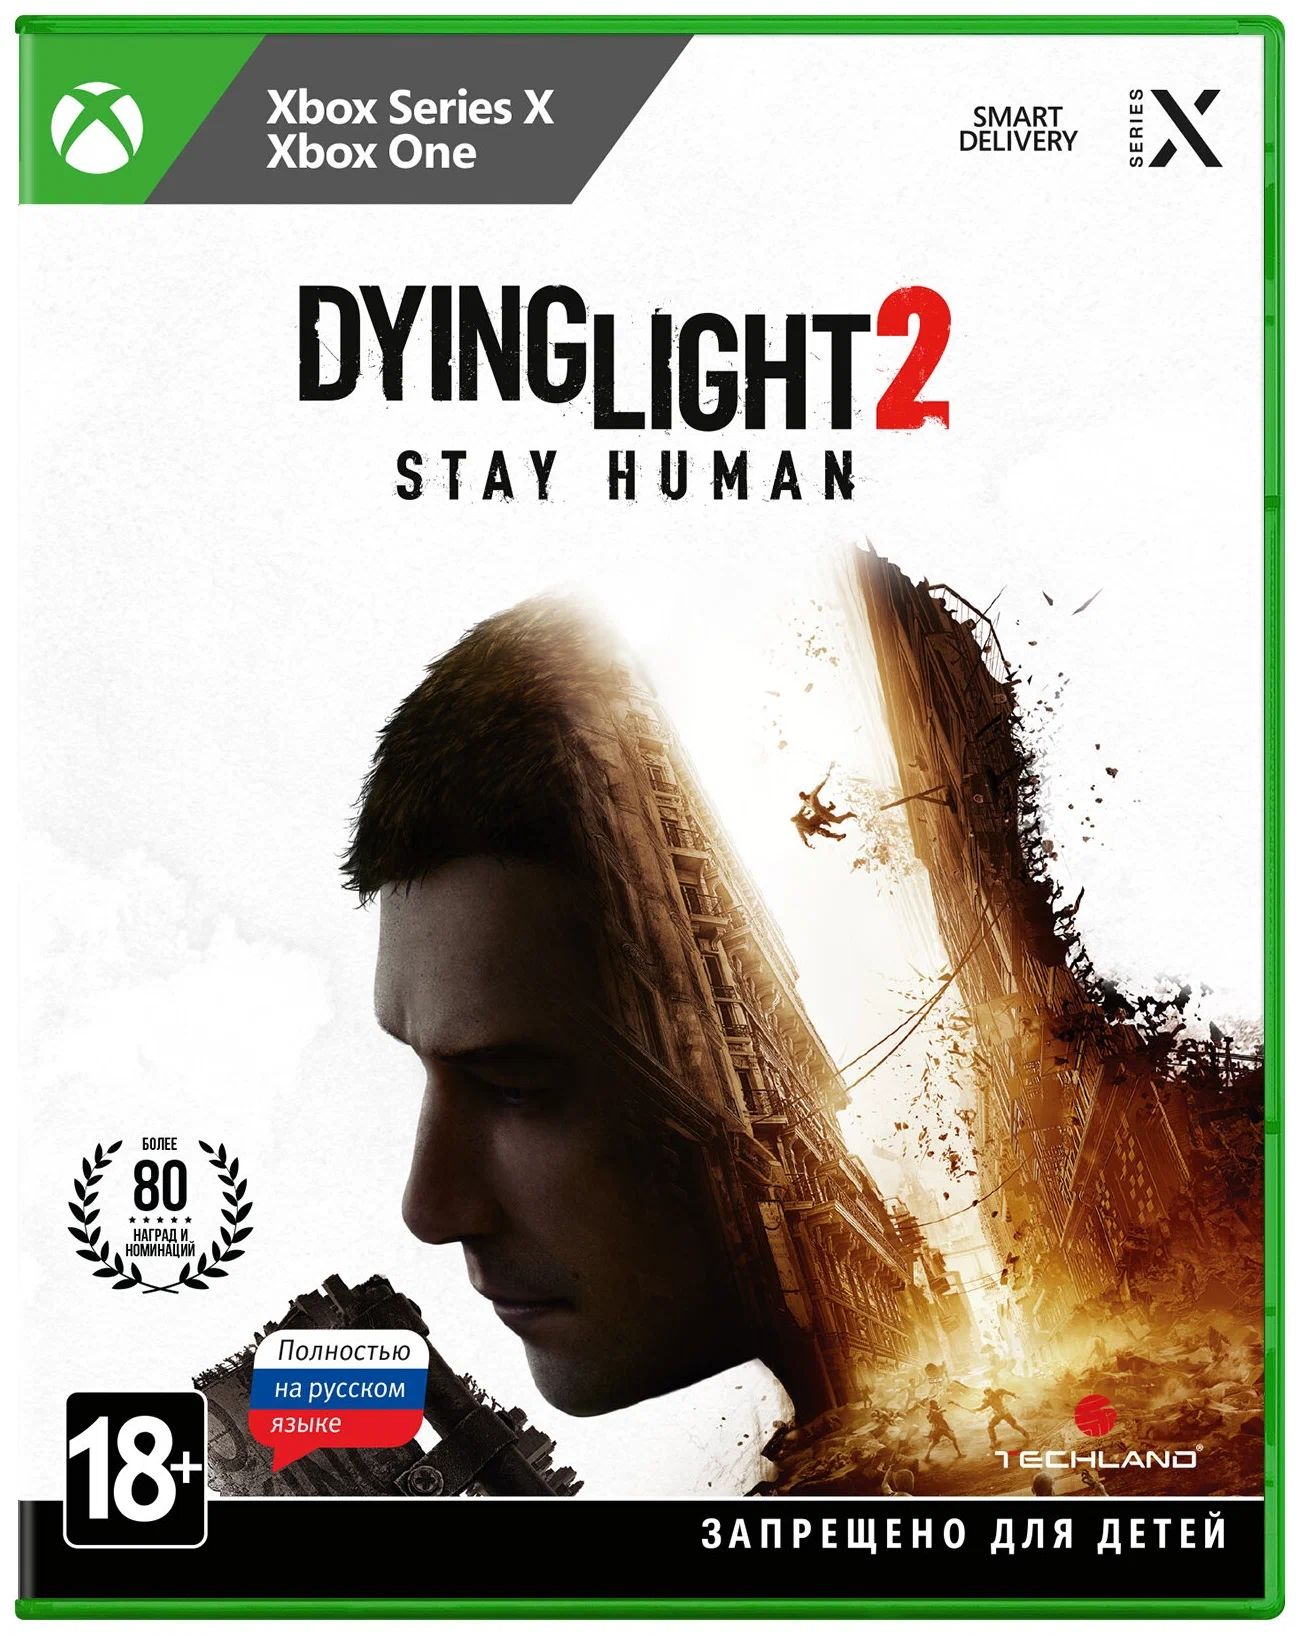 Игра Techland Dying Light 2 Stay Human для Xbox One / Series X игра для приставки microsoft xbox dying light 2 stay human стандартное издание